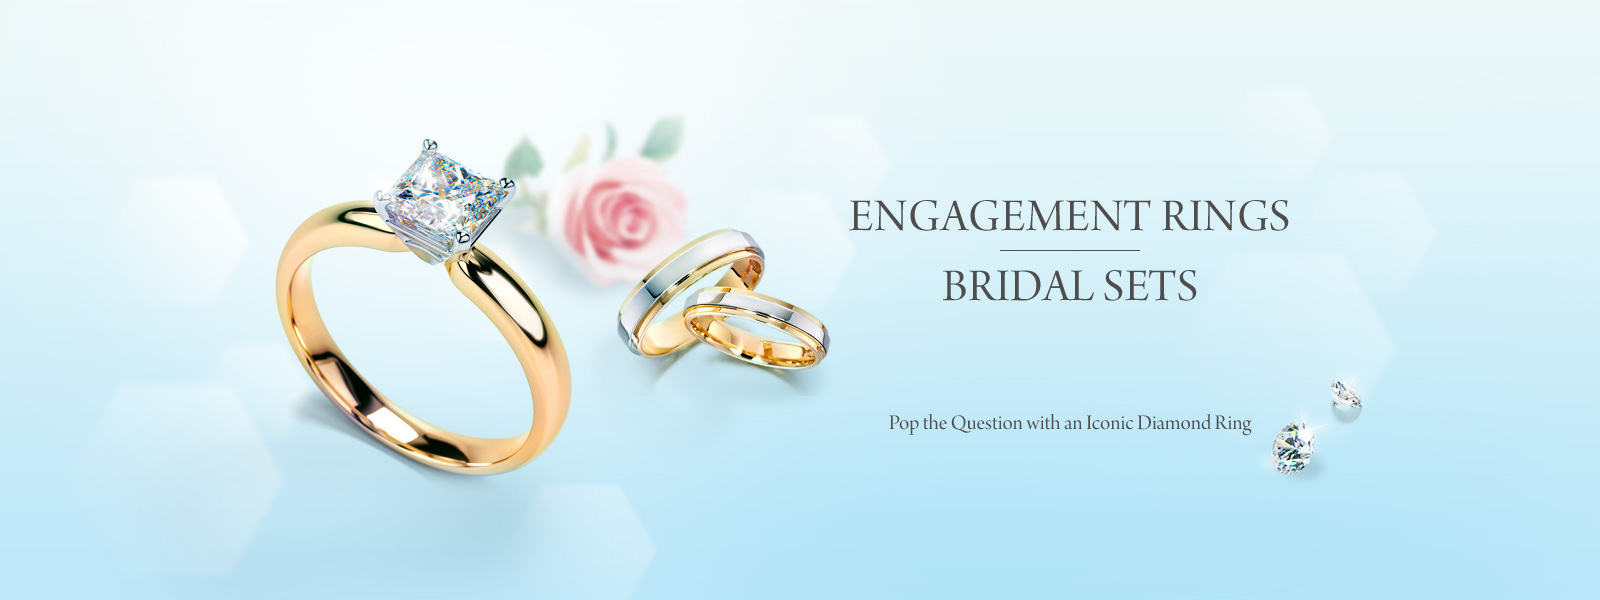 Engagement Rings & Bridal Sets